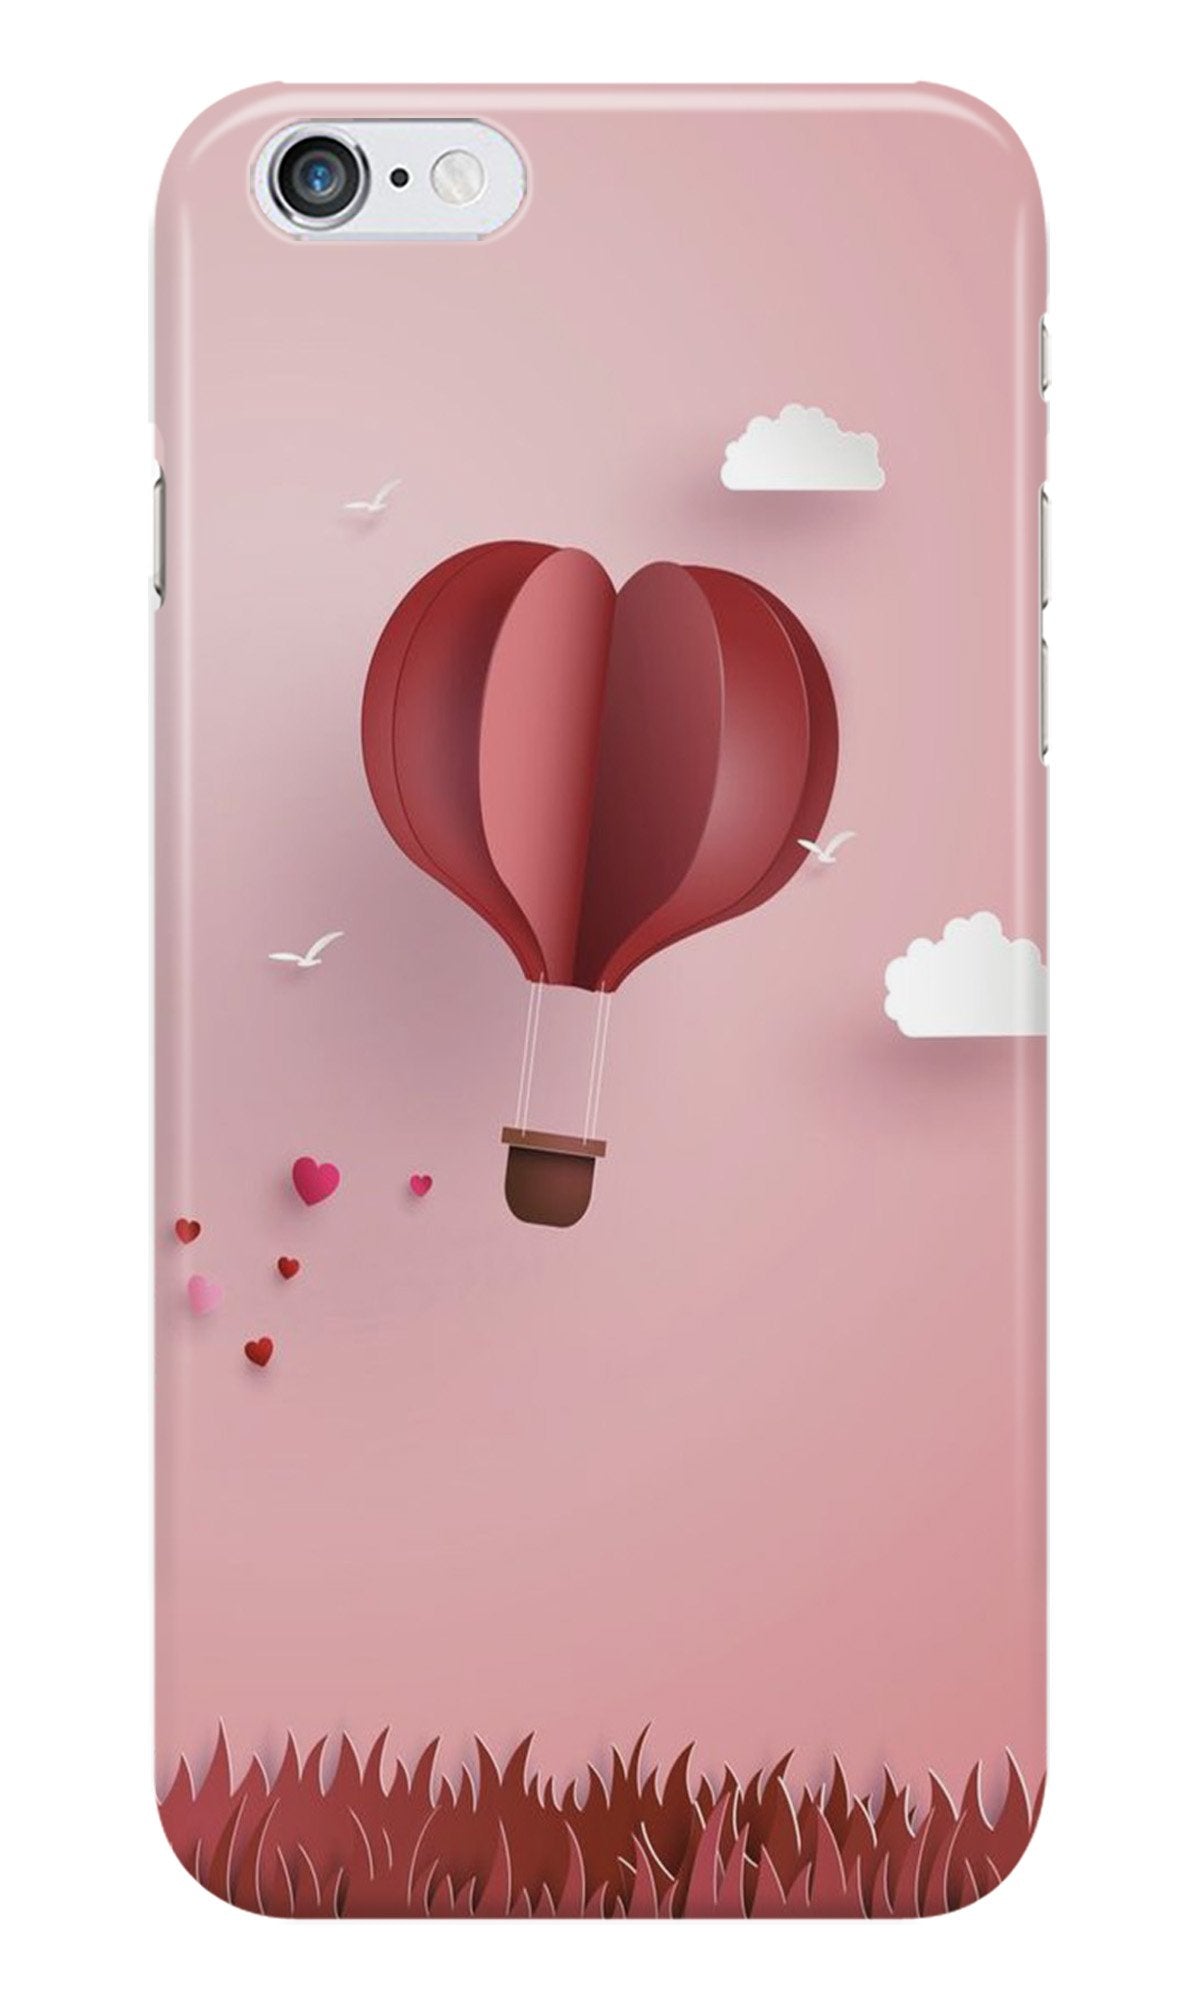 Parachute Case for Iphone 6 Plus/6S Plus (Design No. 286)